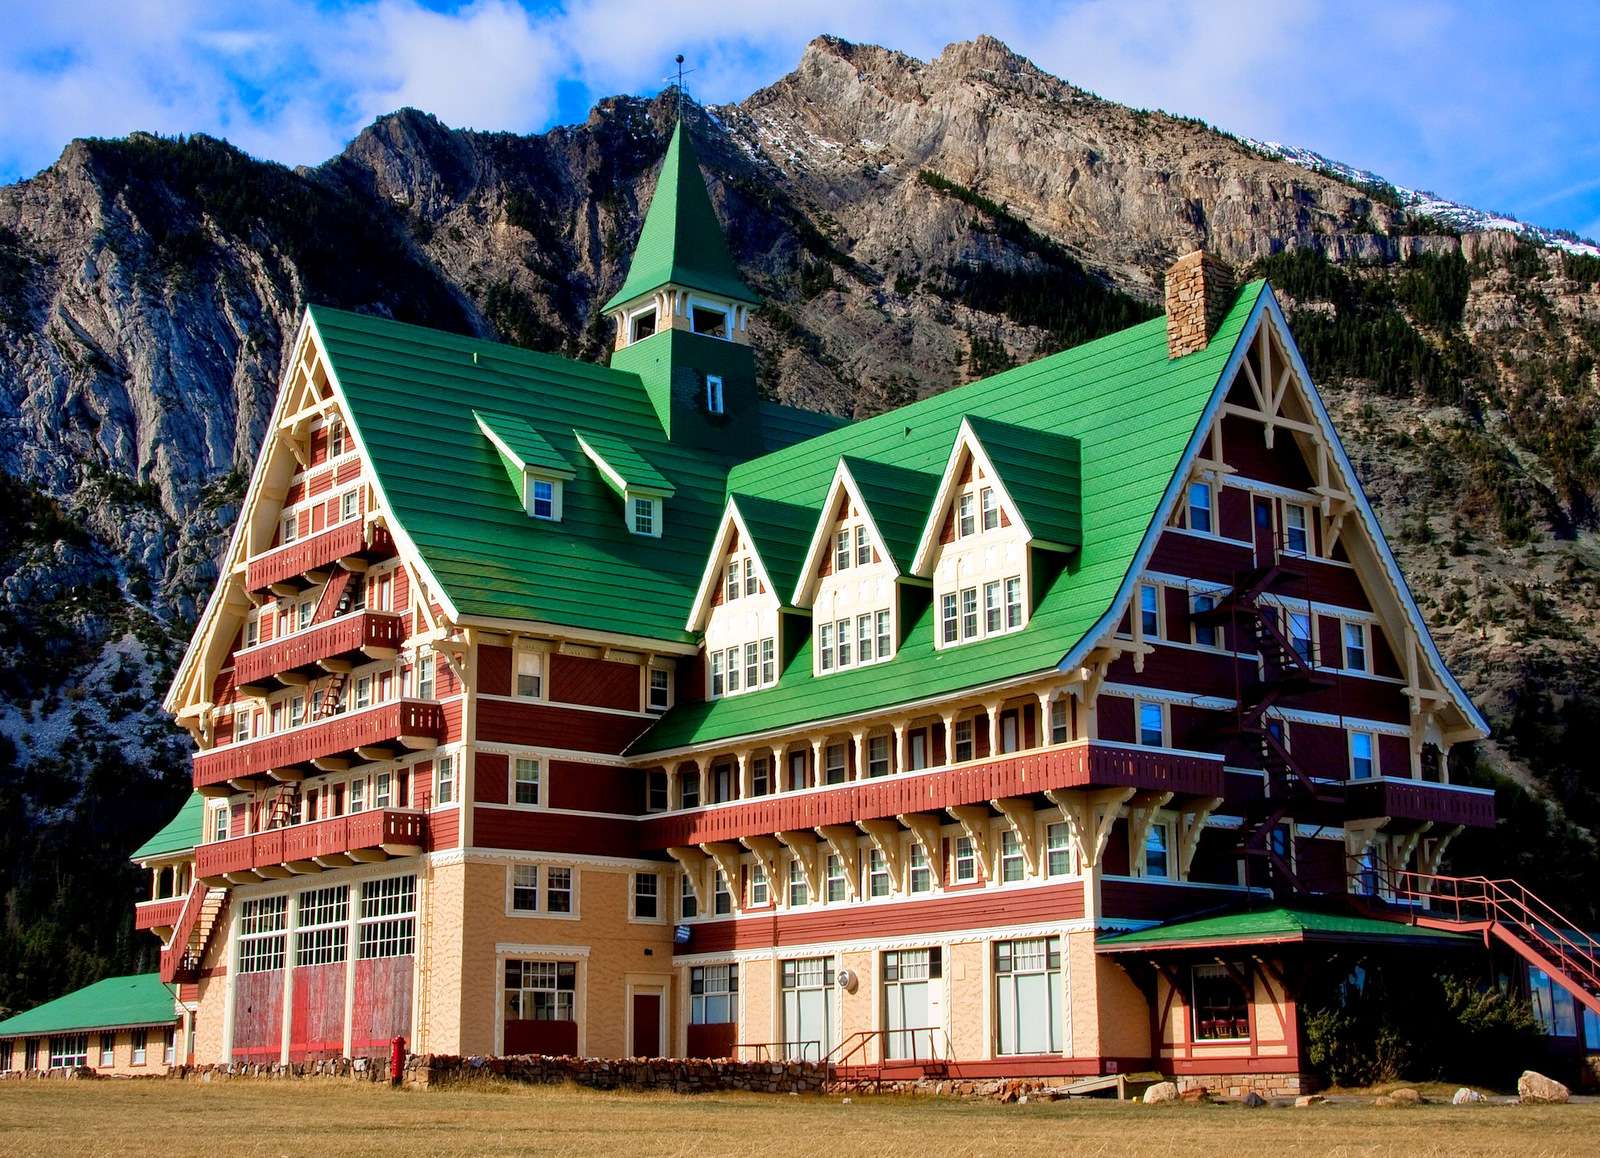 Hotel "Prince of Wales" w Kanadzie puzzle online